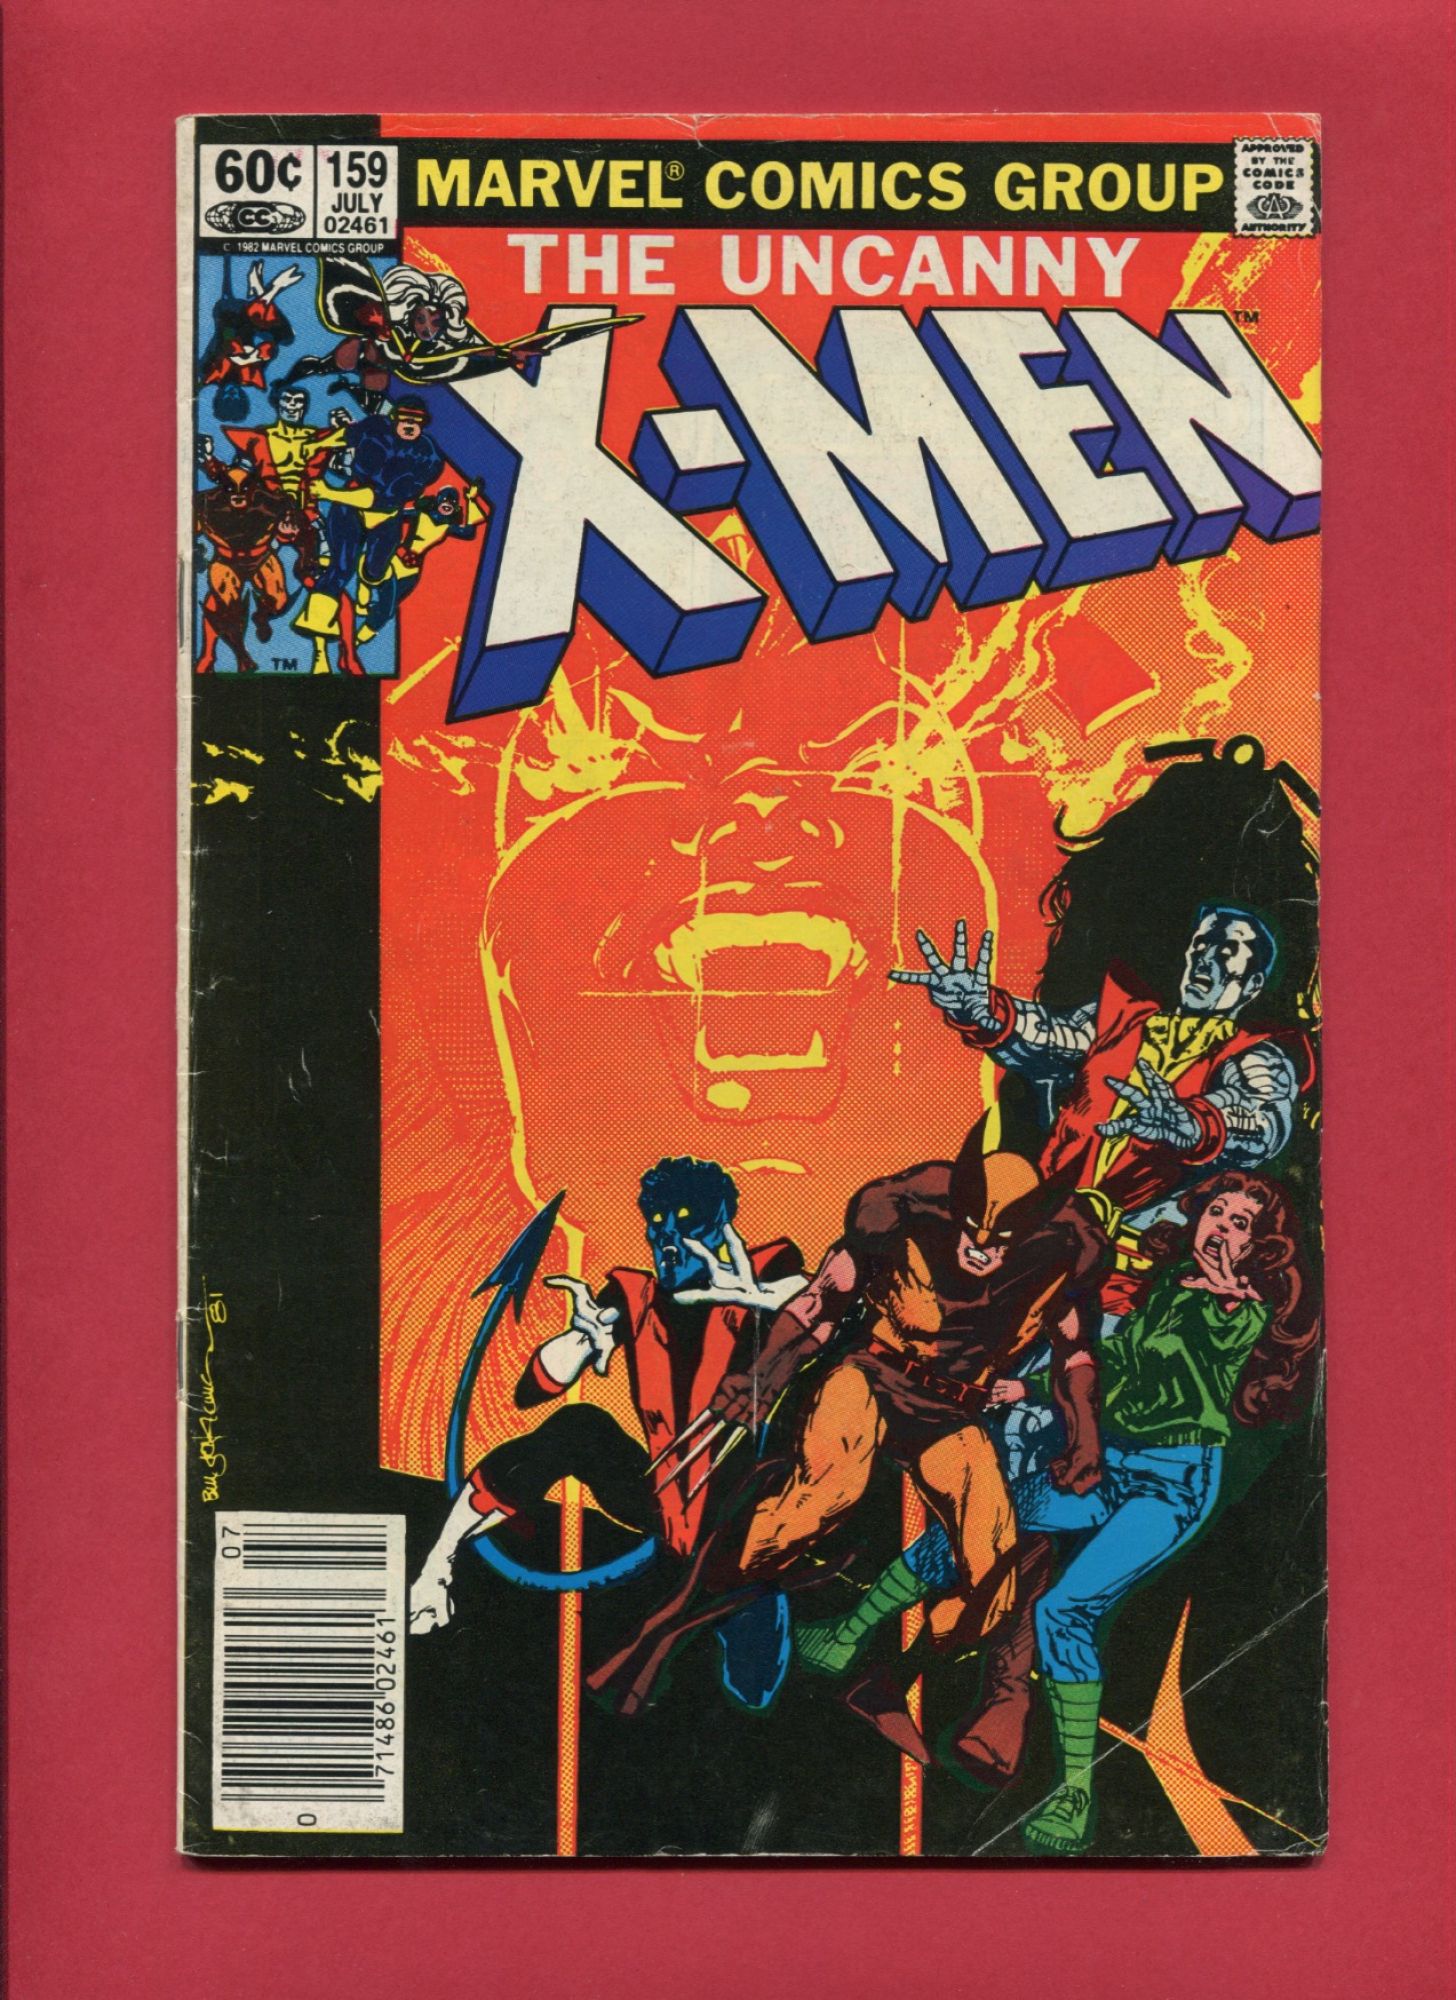 Uncanny X-Men #159, Jul 1982, 4.0 VG